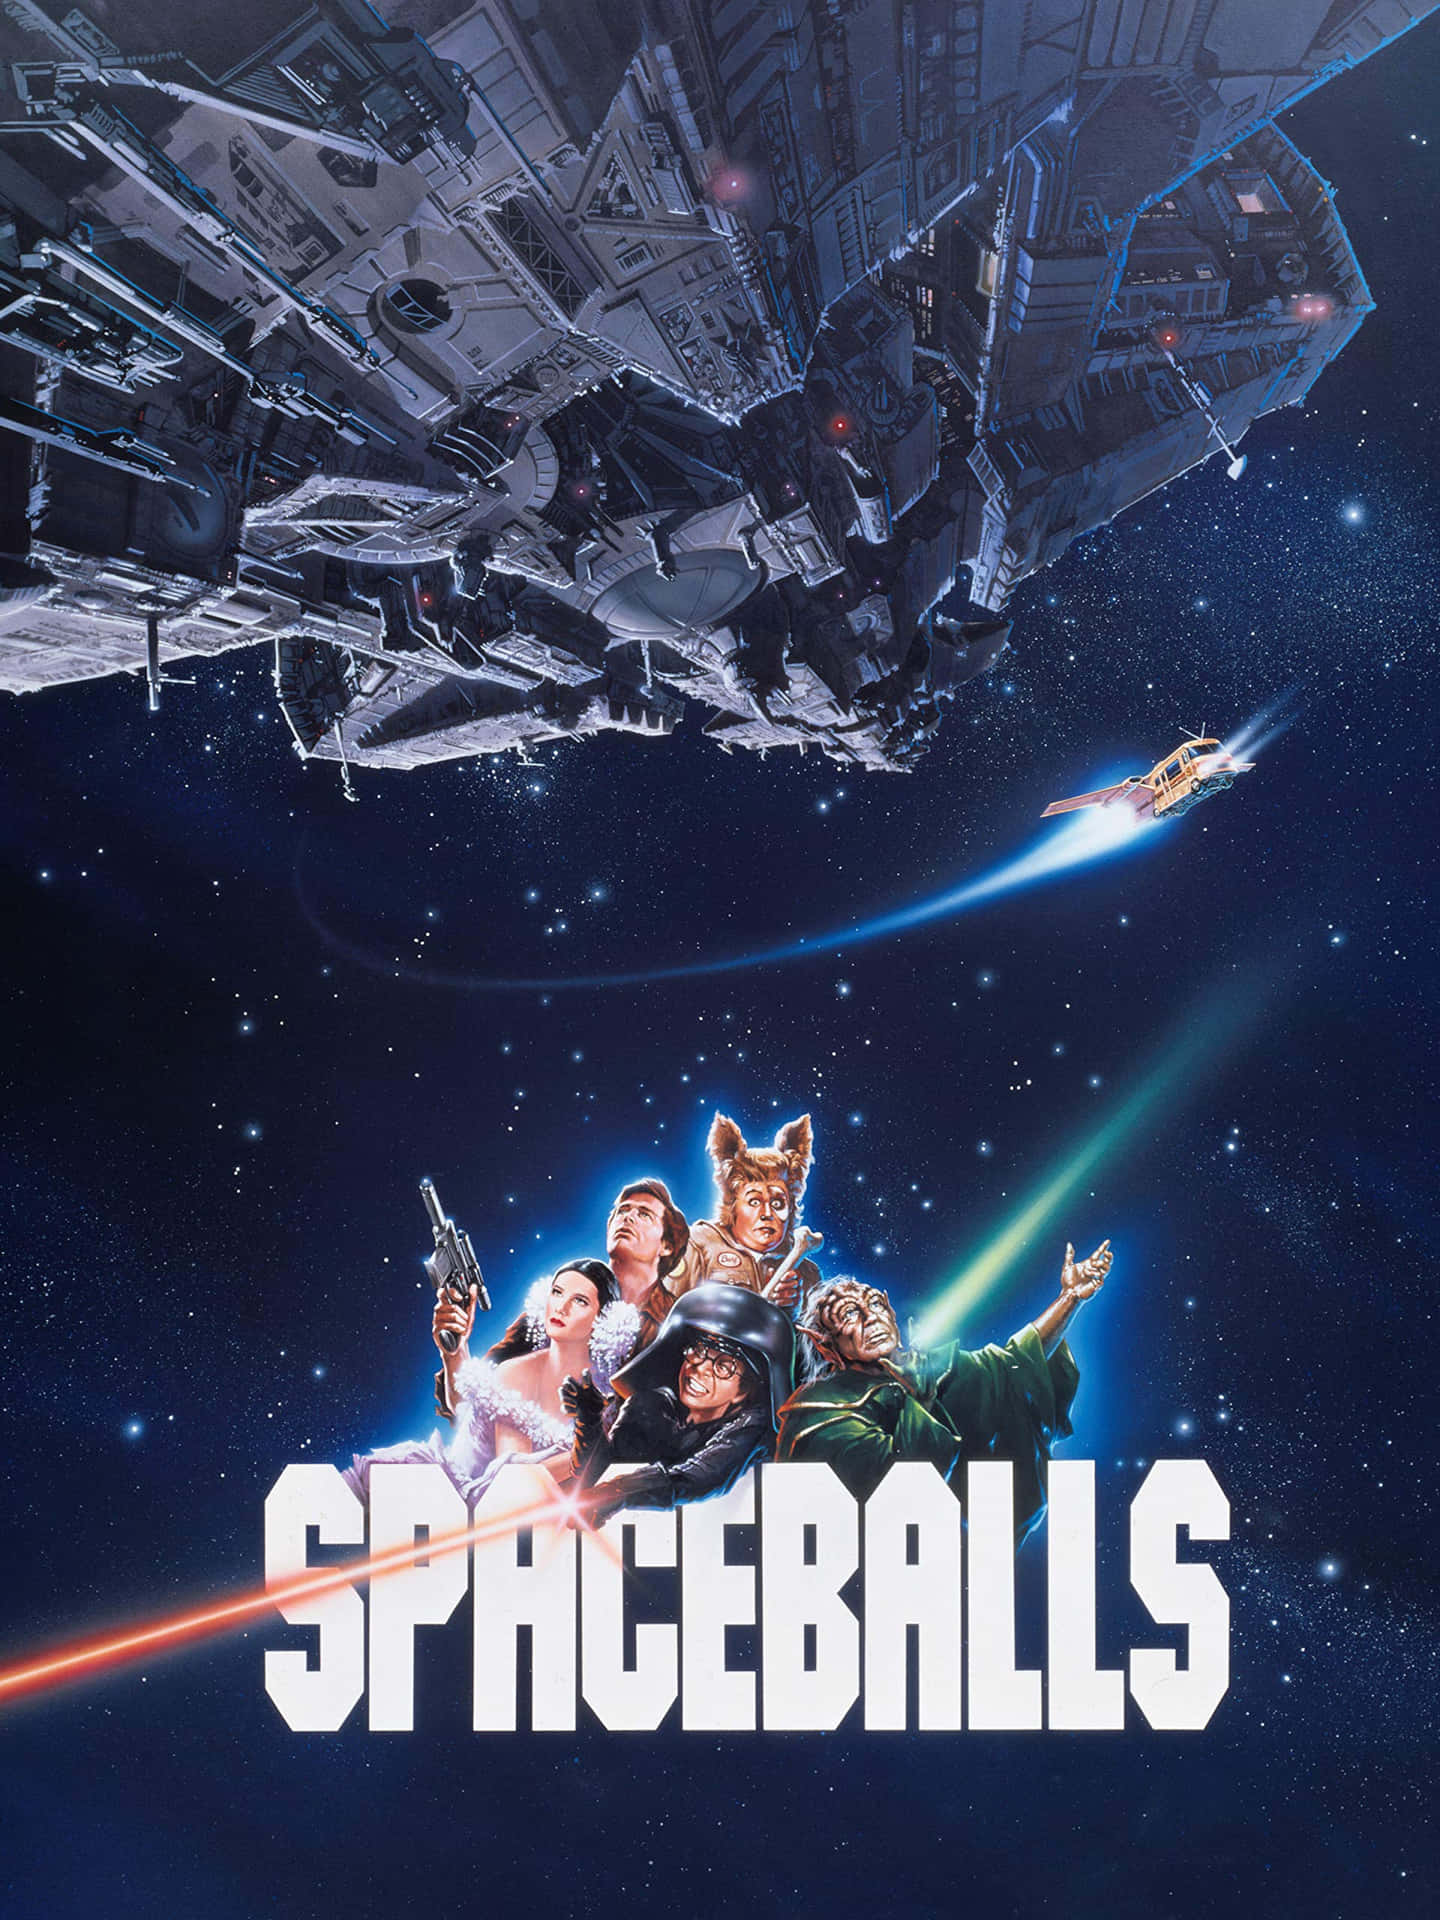 Spaceballs Spaceball One Poster Background